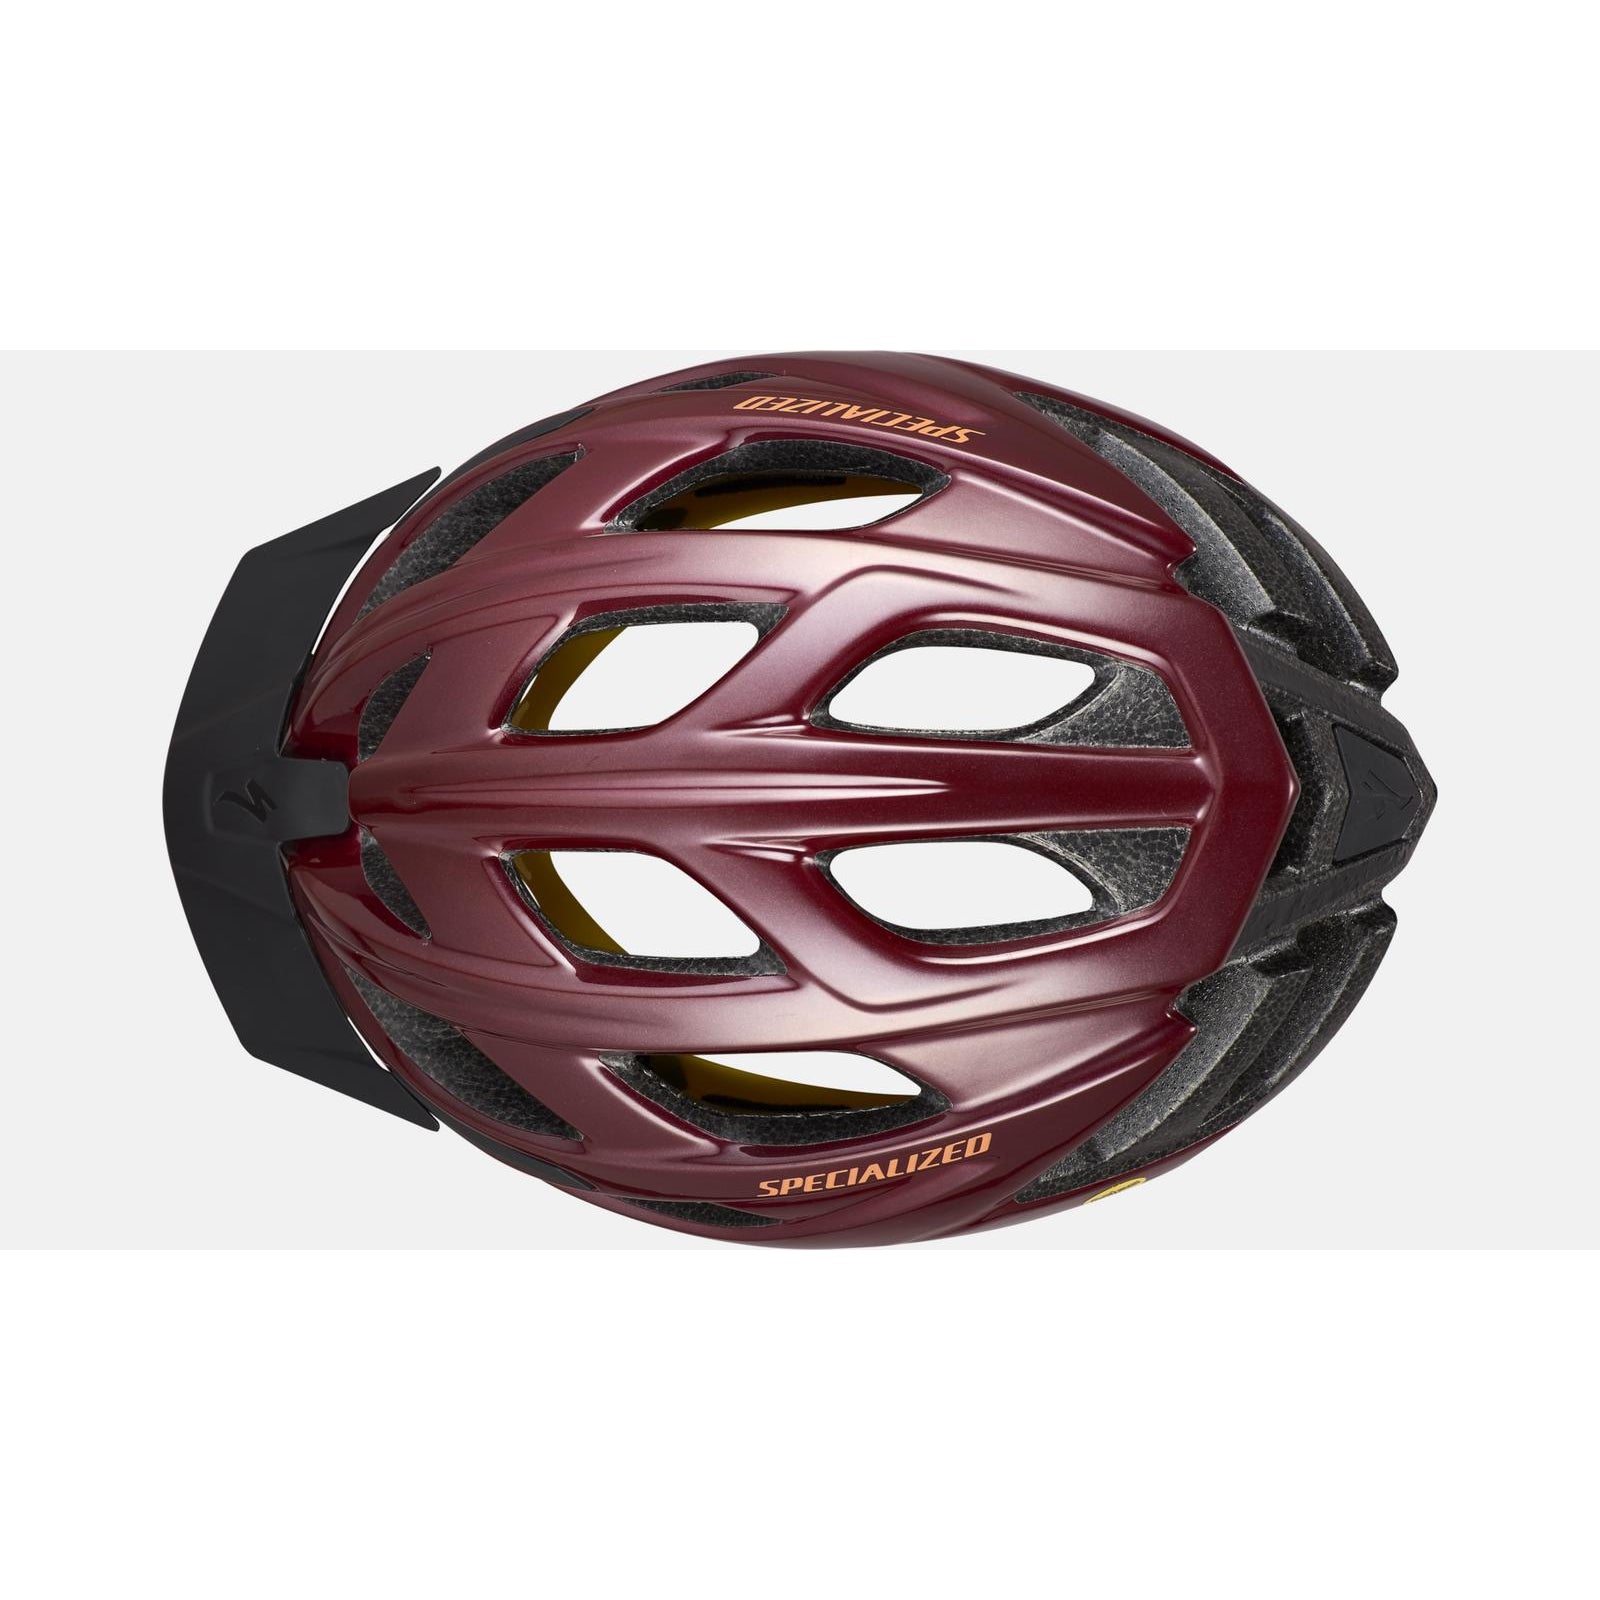 Chamonix 2 Road Bike Helmet